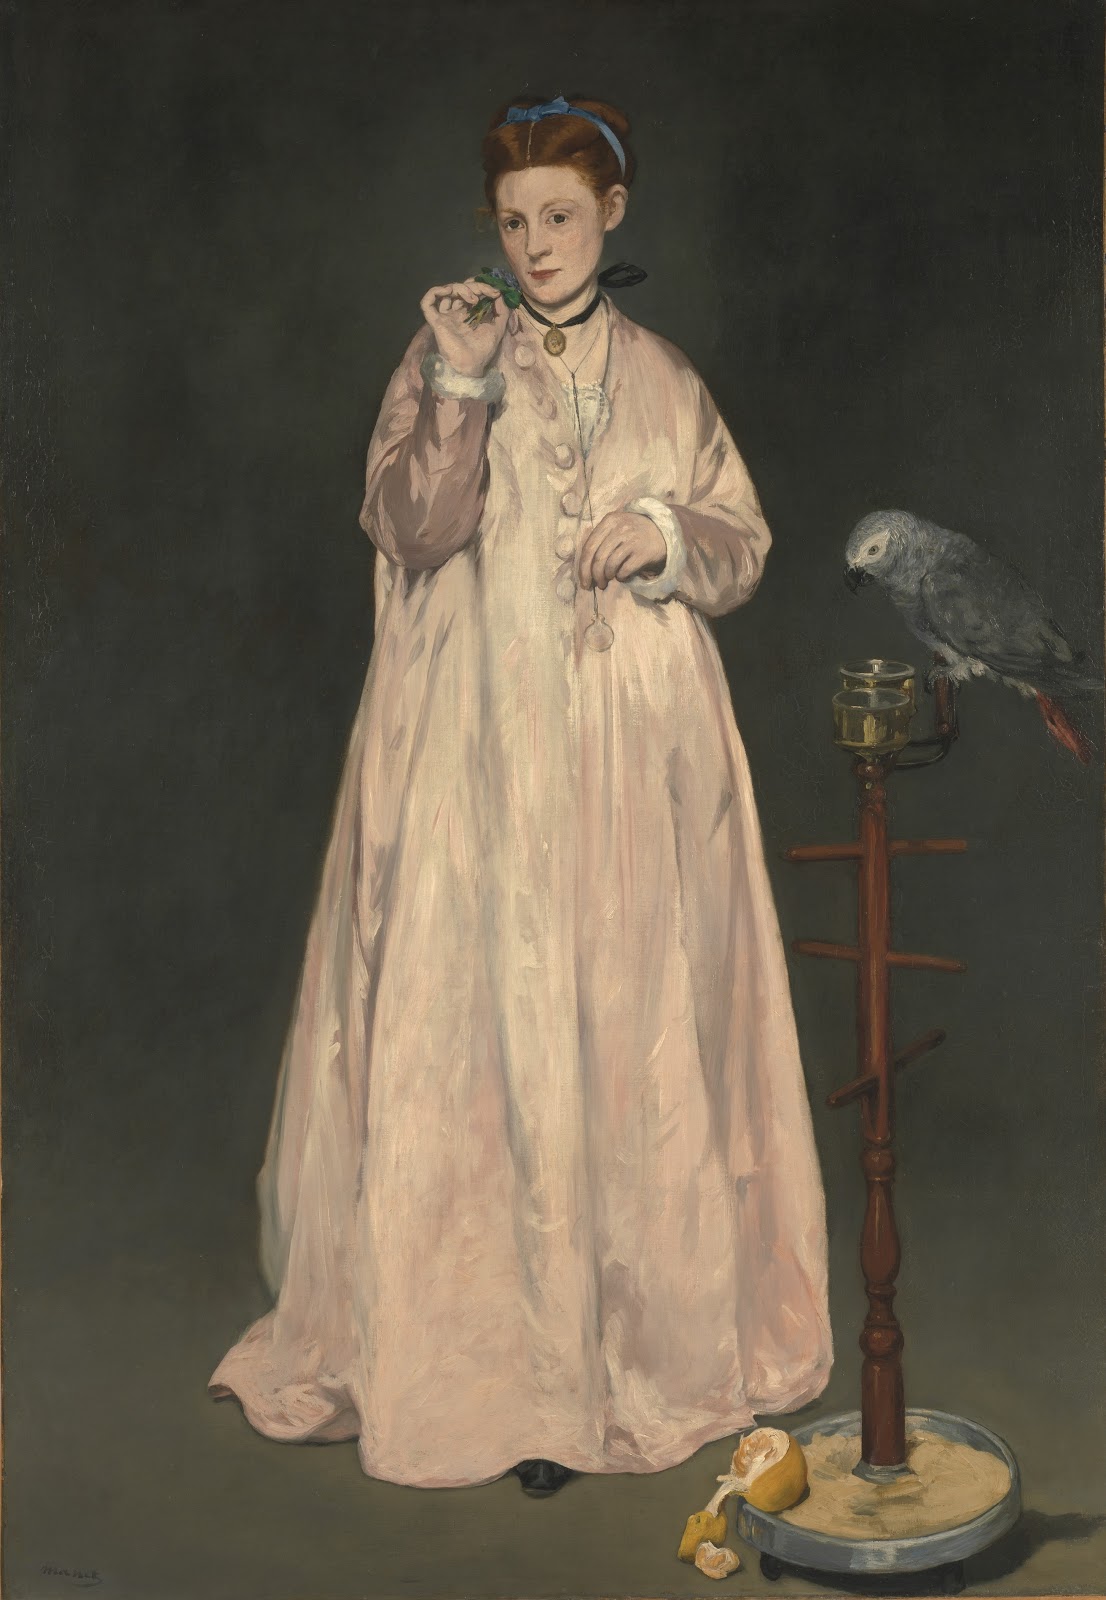 Edouard+Manet-1832-1883 (147).jpg